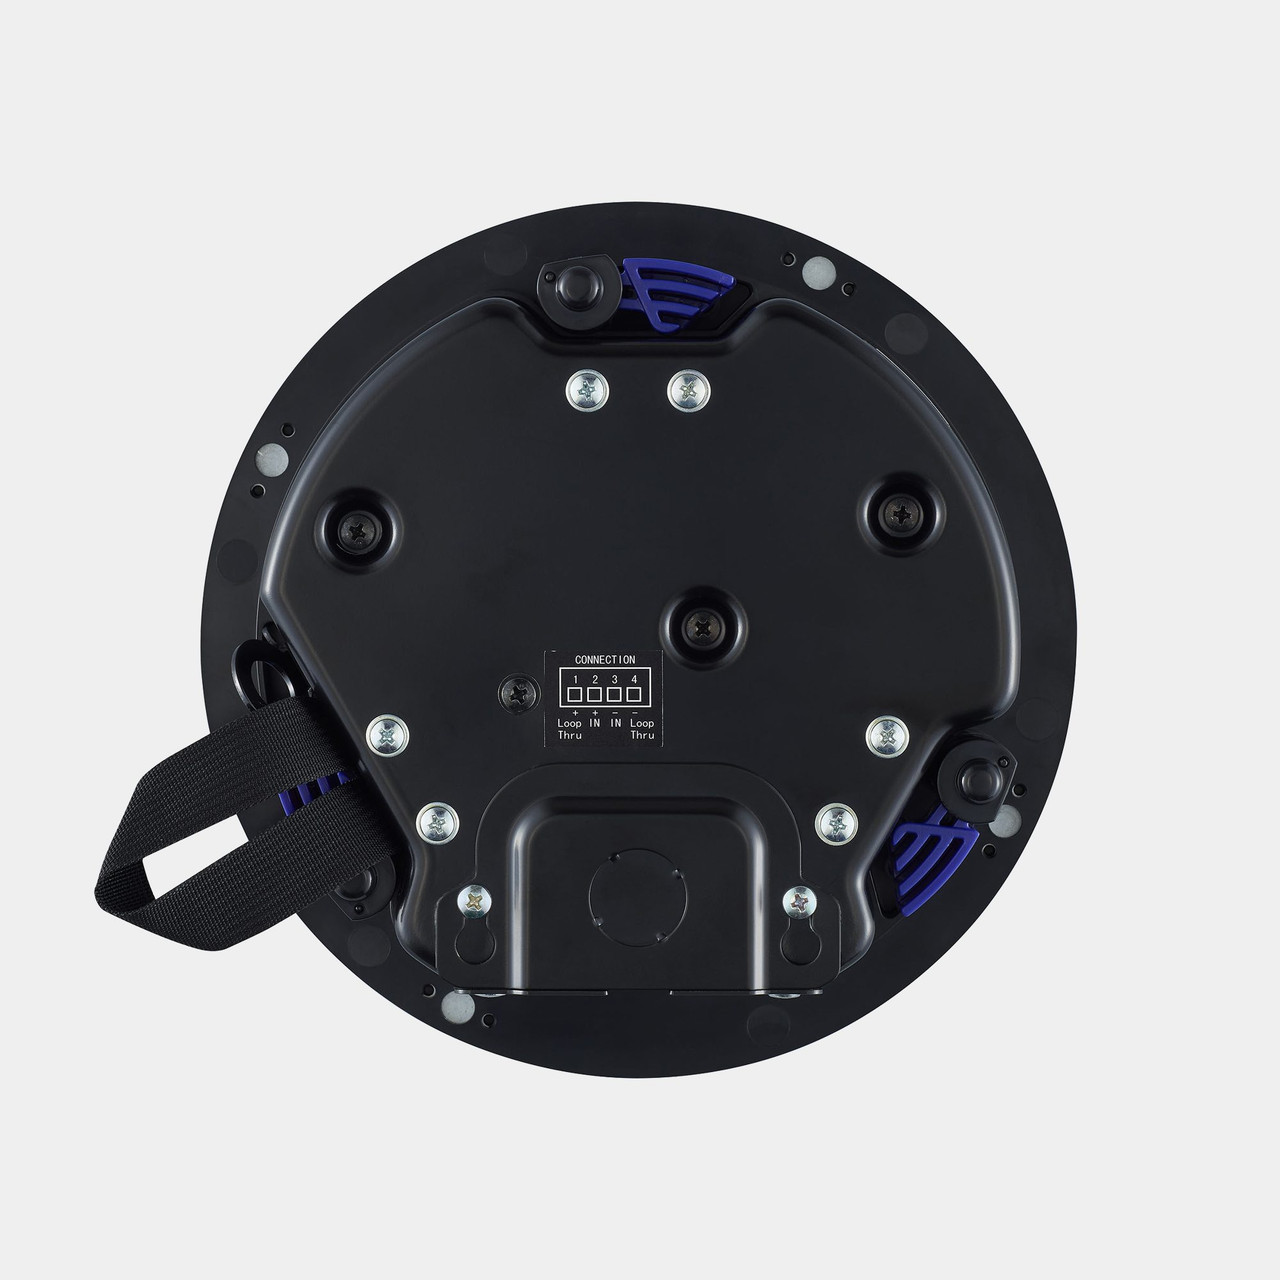 Yamaha VXC2F 2.5" 8 ohm 70/100V Full Range Low Profile In-Ceiling Speakers (Pair)